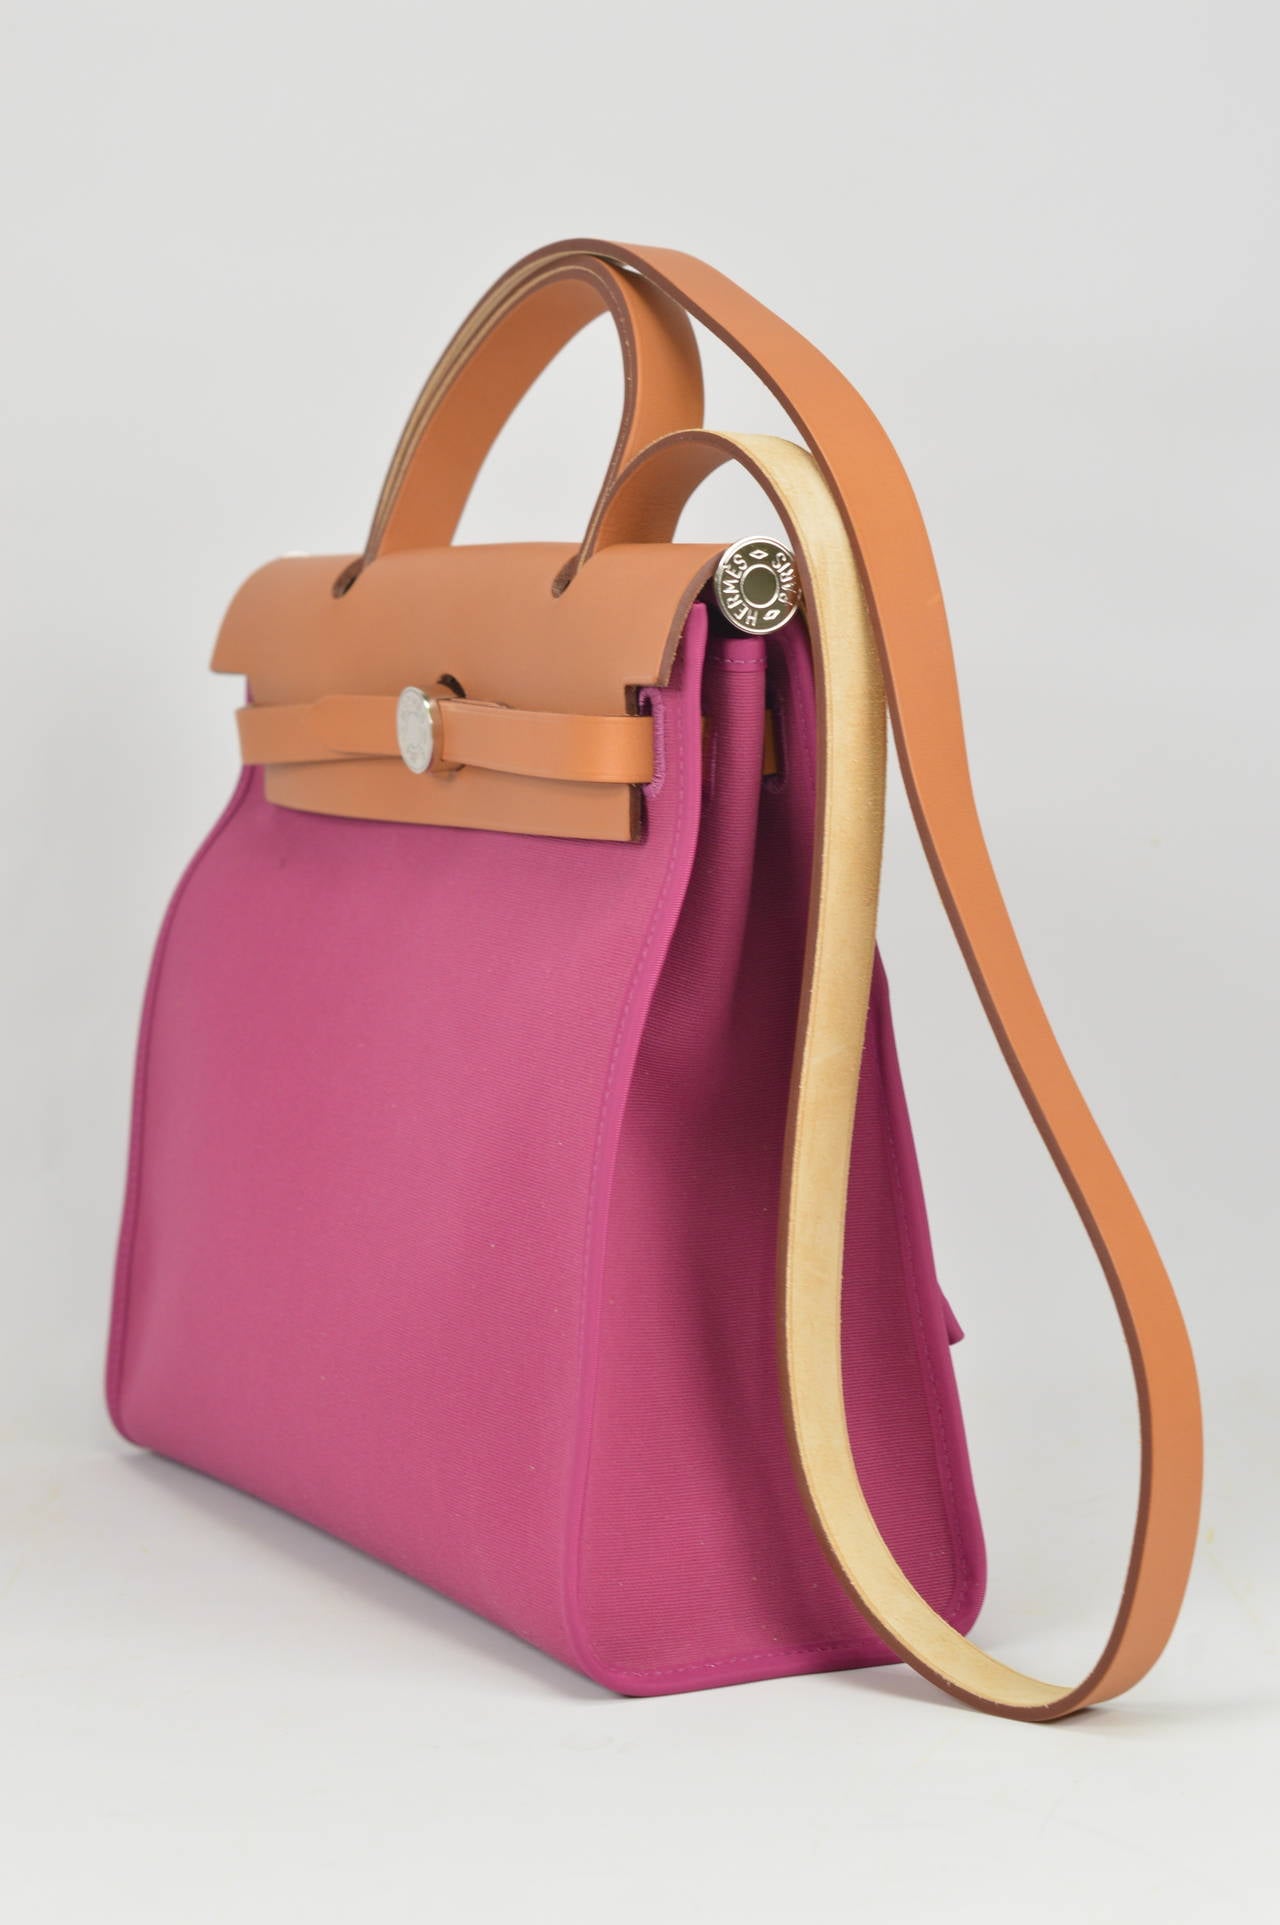 2014 Hermes Handbag Herbag 31cm Tosca-Naturel color, Palladium ...  